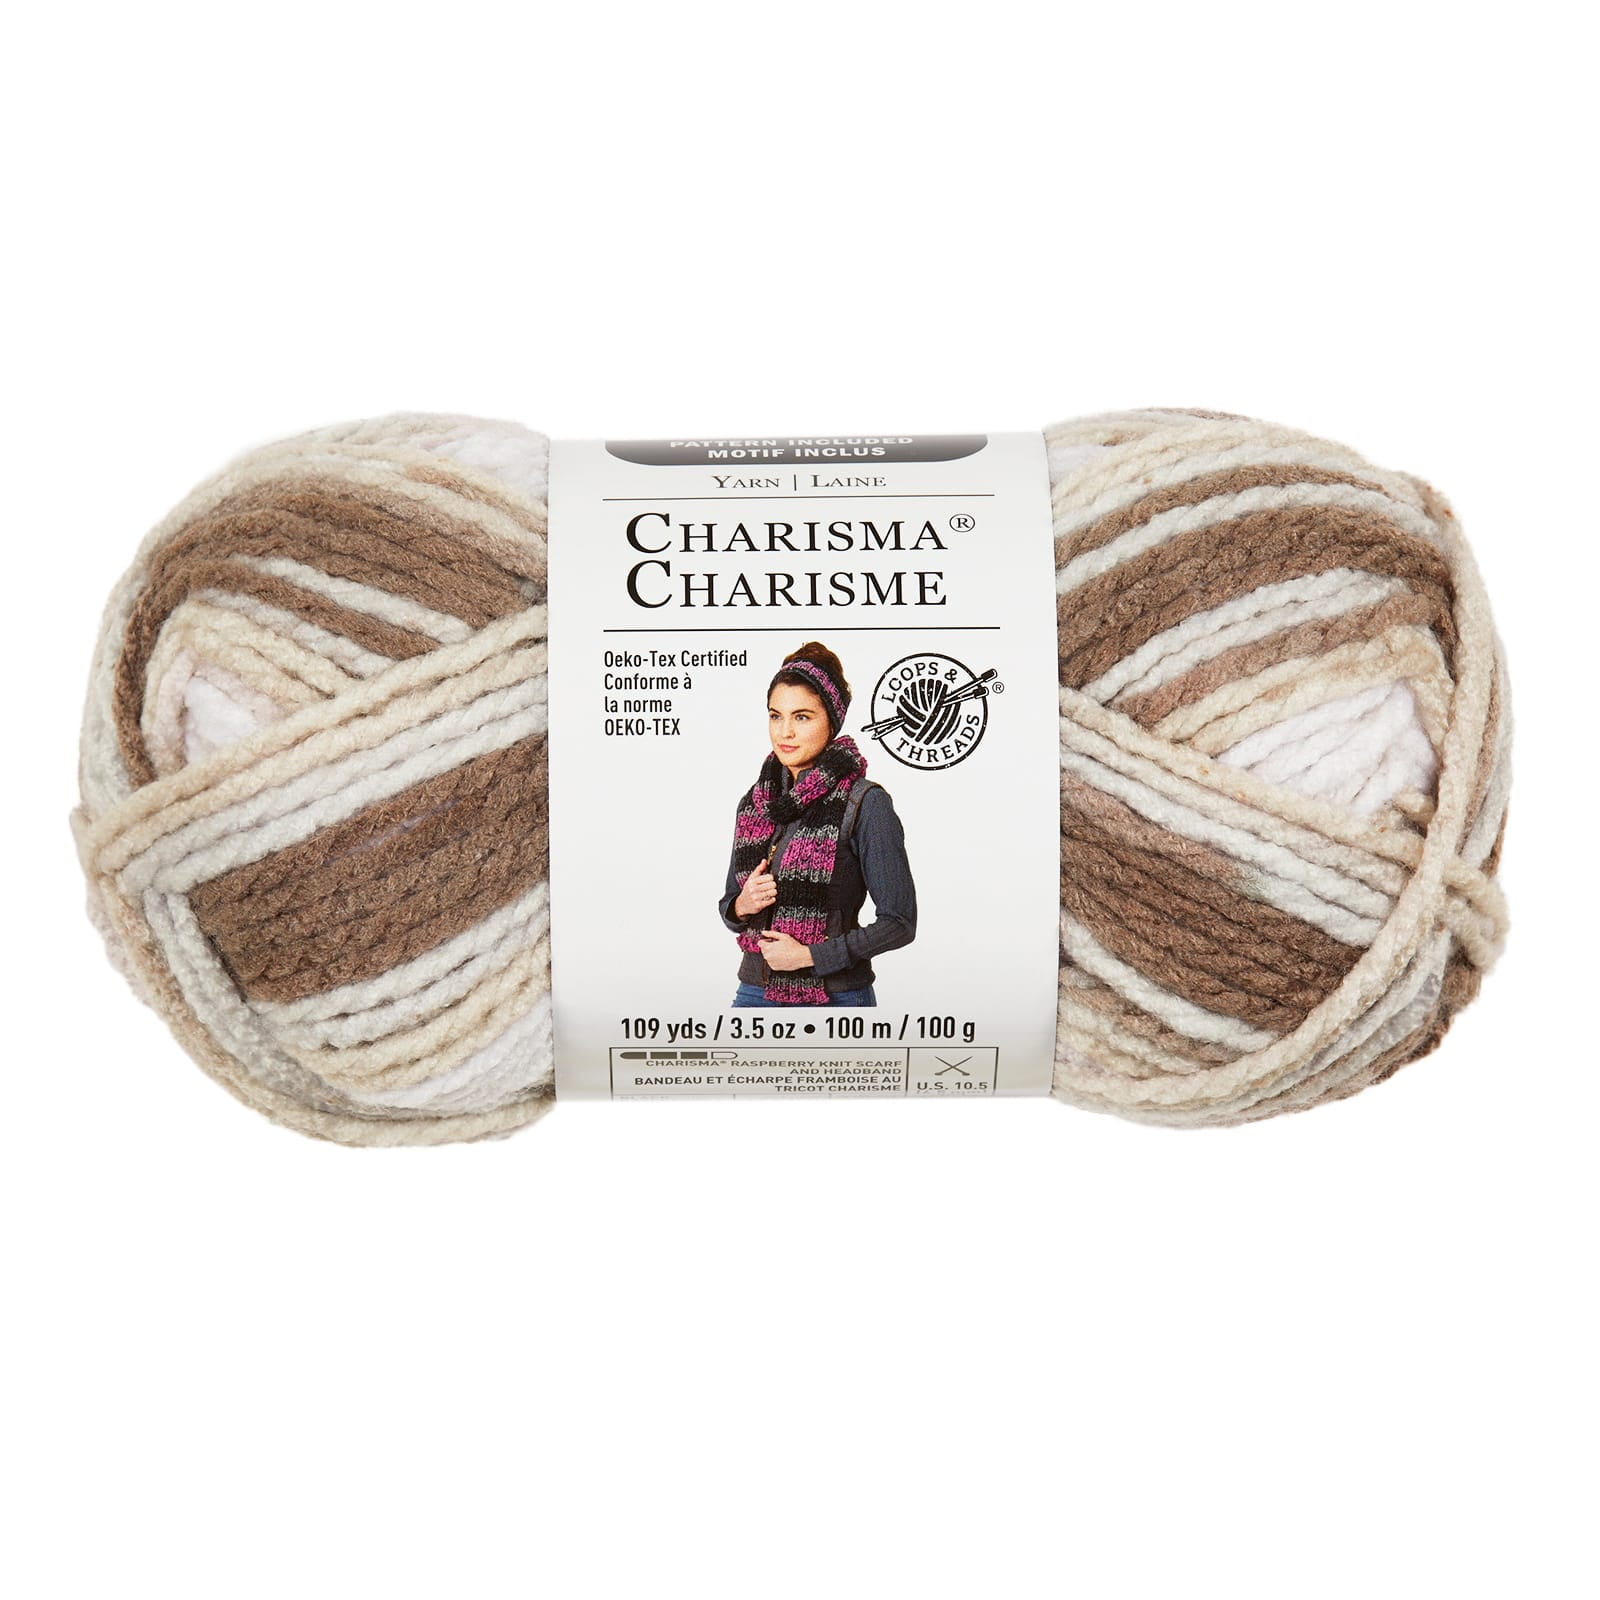 Soft Classic Multi Ombre Yarn by Loops & Threads - Multicolor Yarn